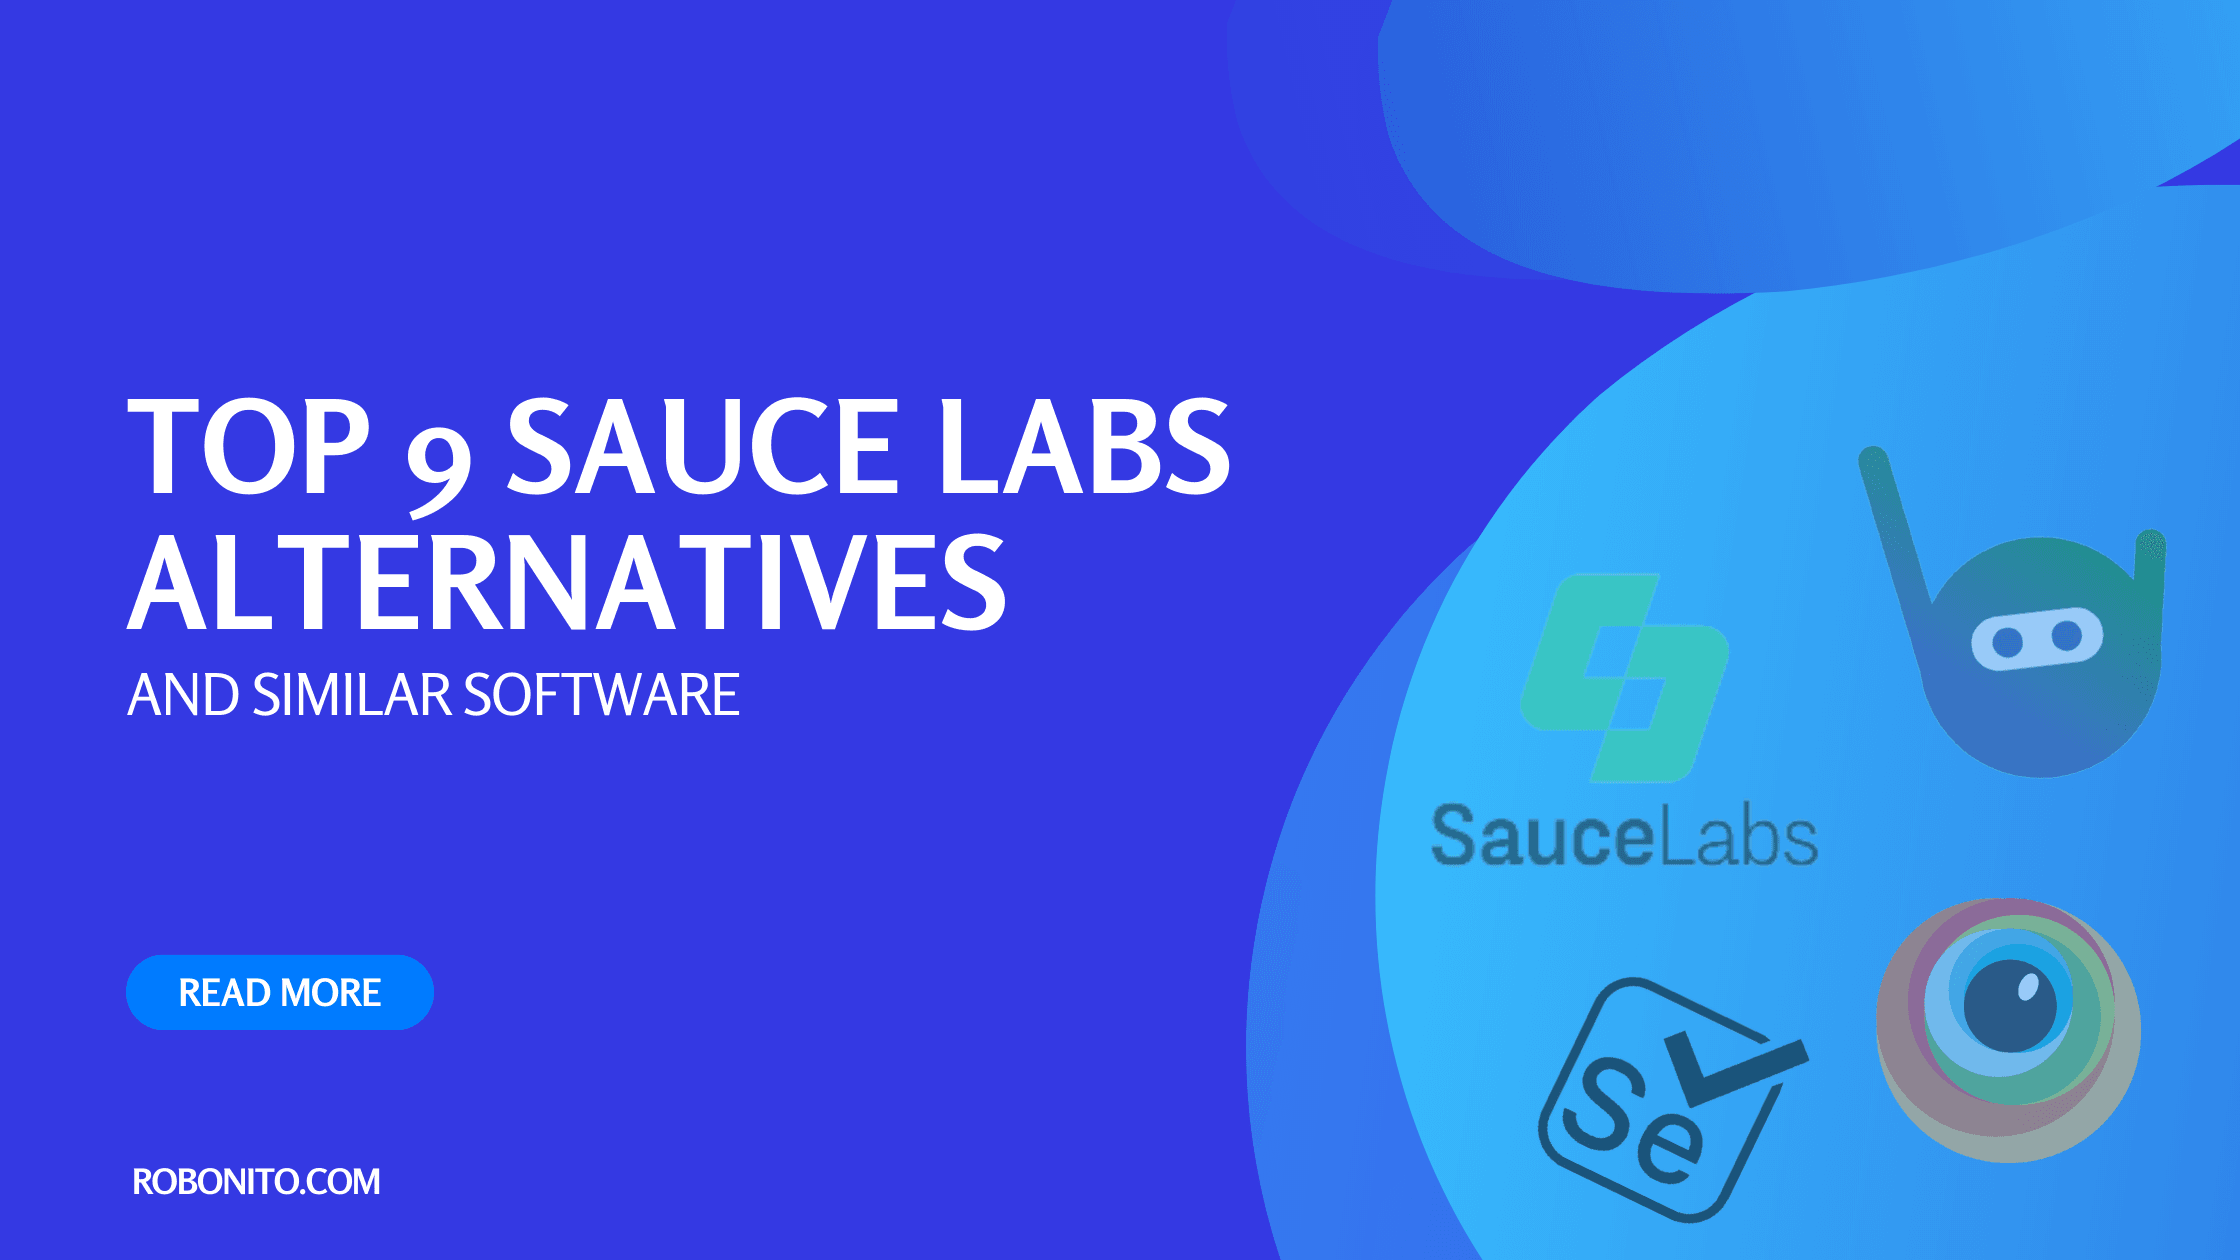 Top 9 Sauce Labs Alternatives